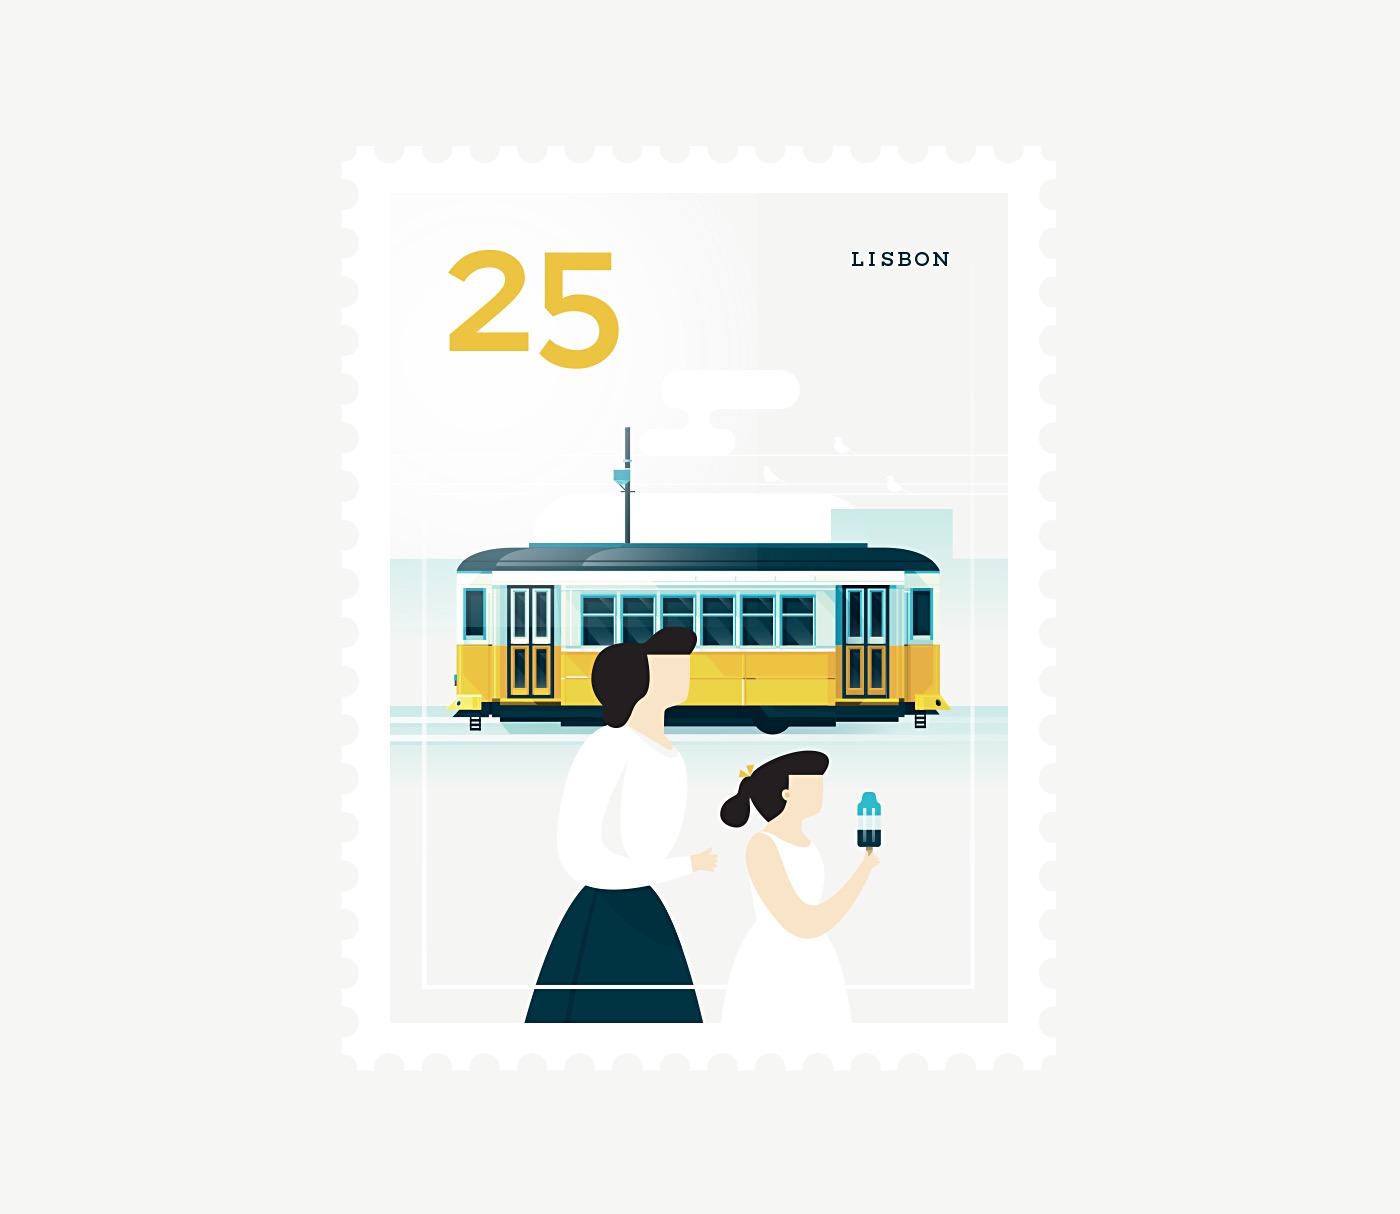 Elen Winata极简的城市风光插画邮票设计